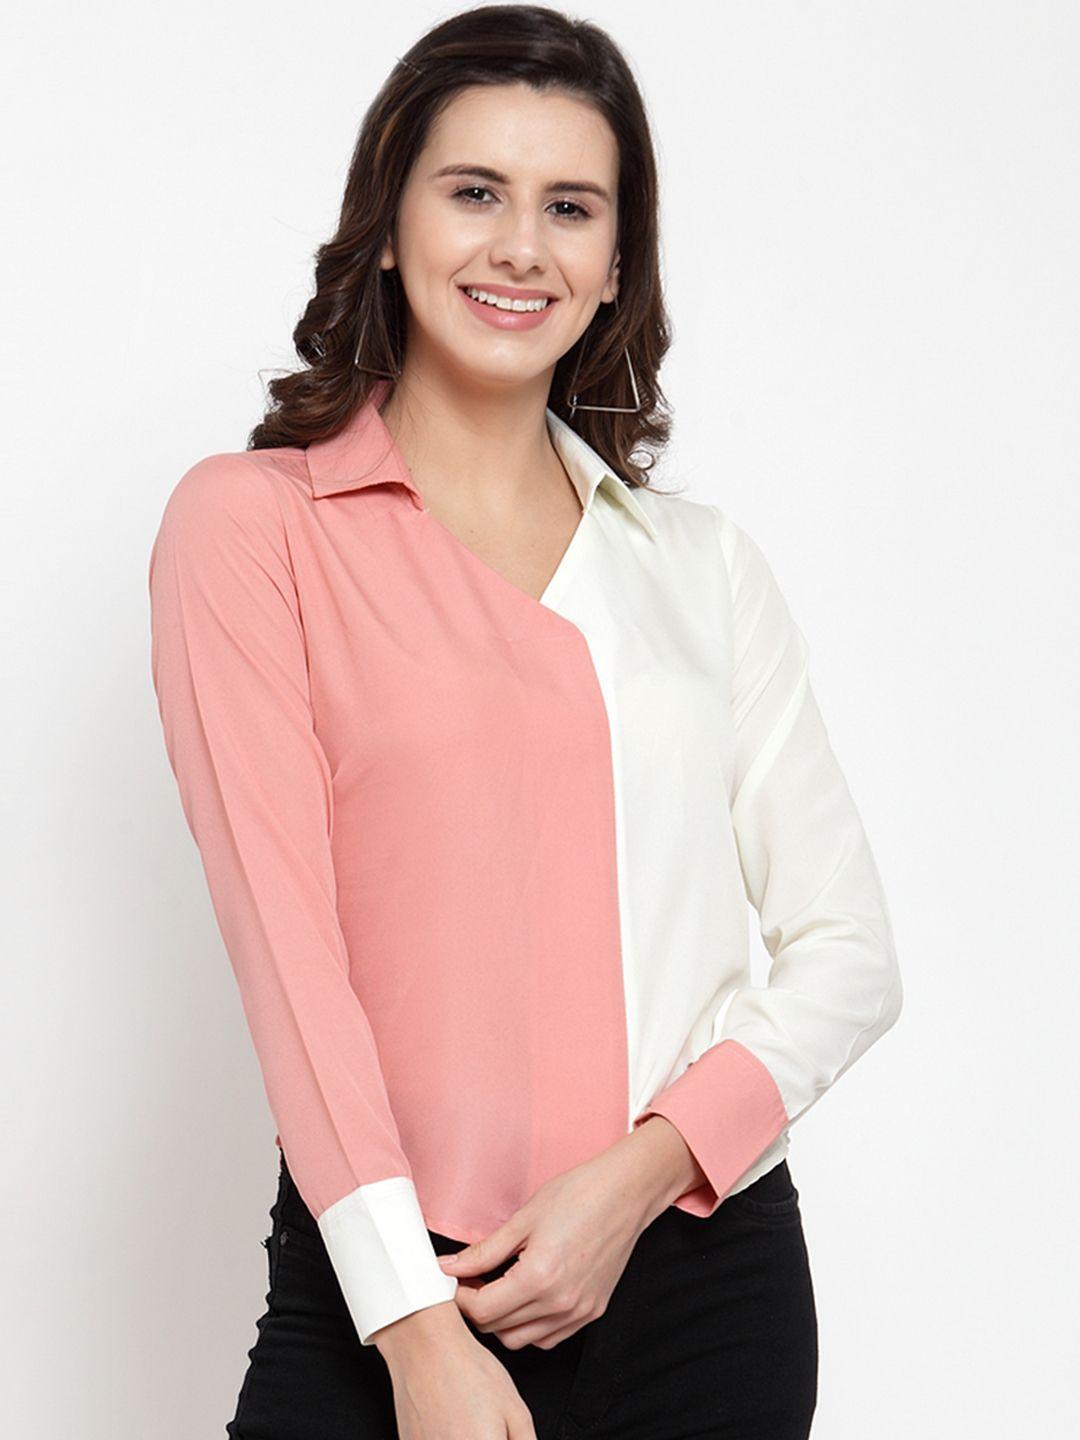 klauressa women pink & white colourblocked shirt style top